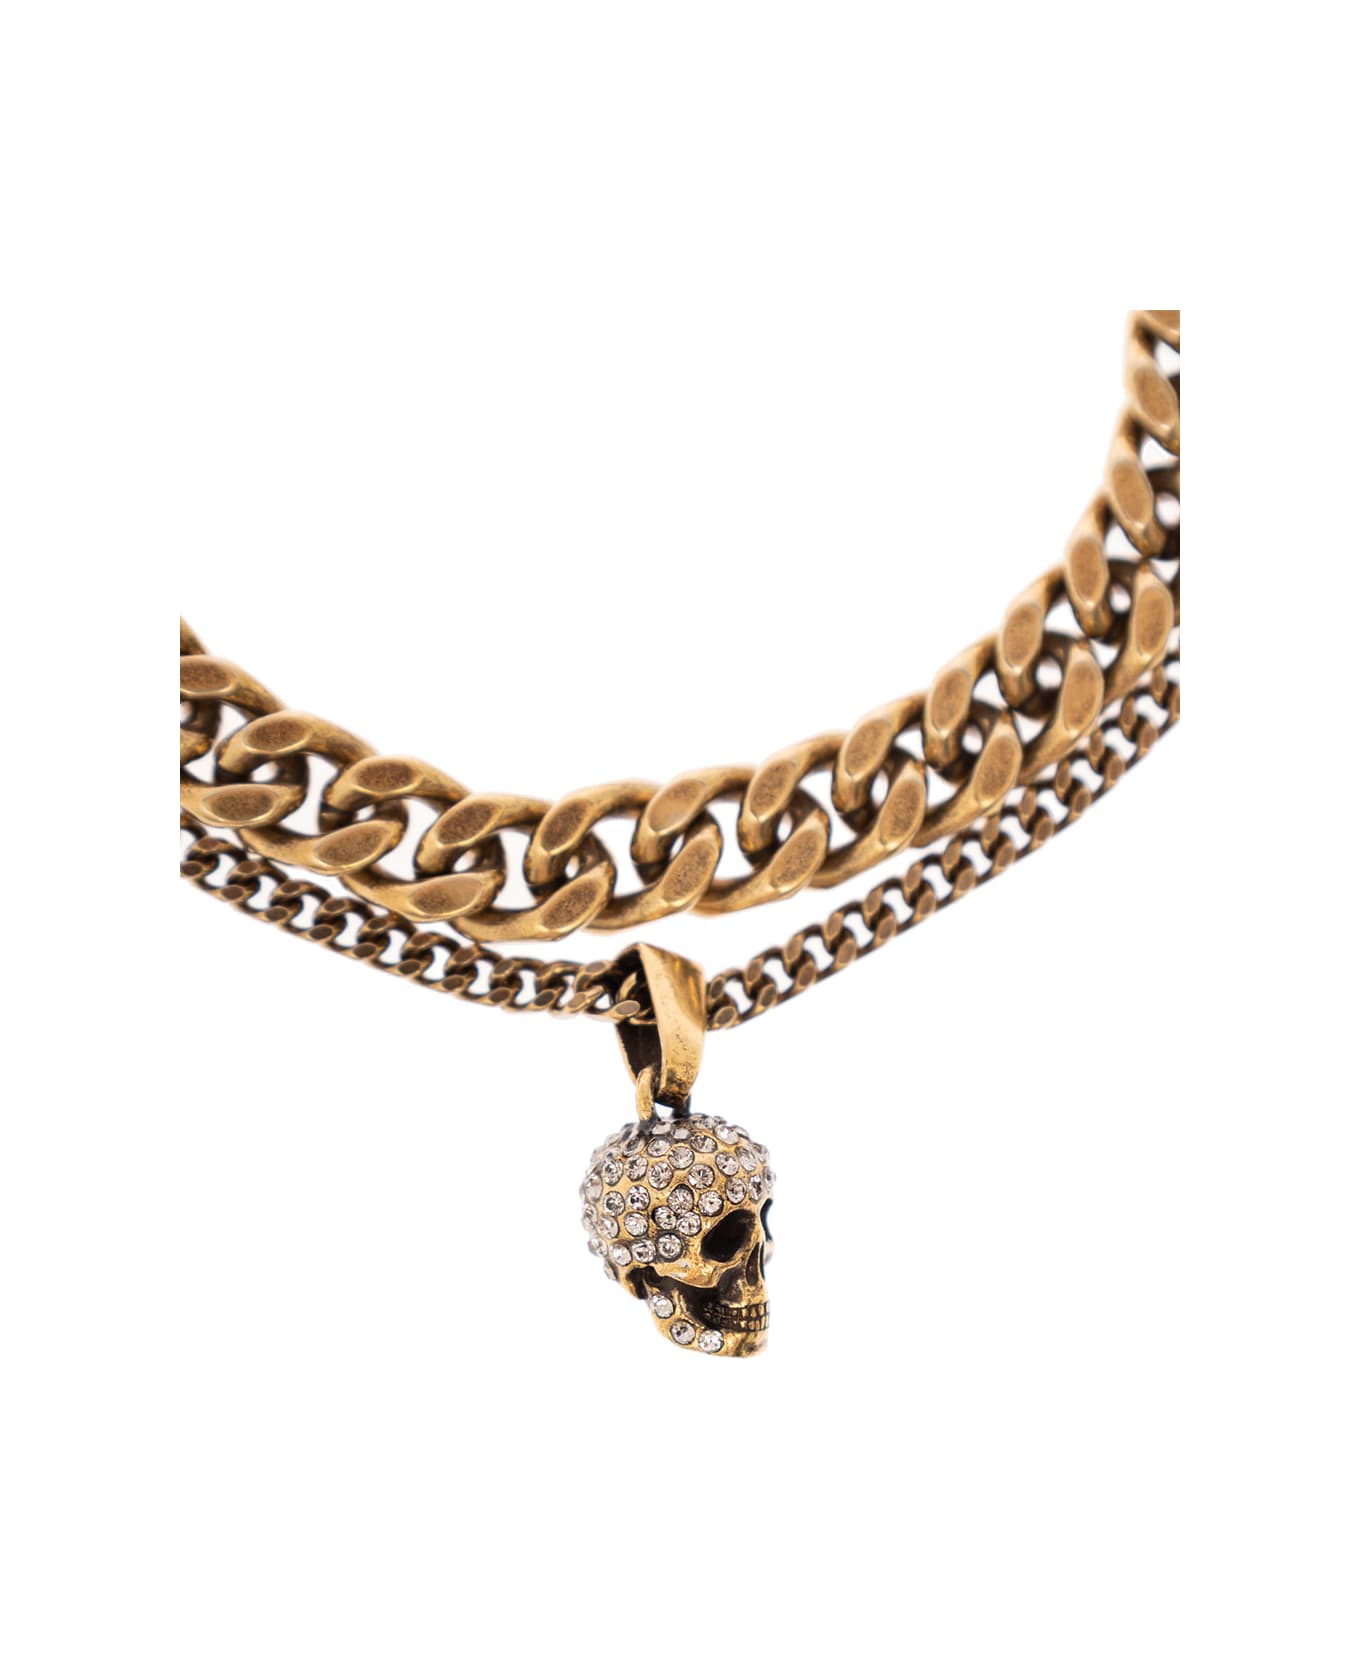 Alexander McQueen Woman's Pave Double Chain Metal Bracelet With Skull Detail - Metallic